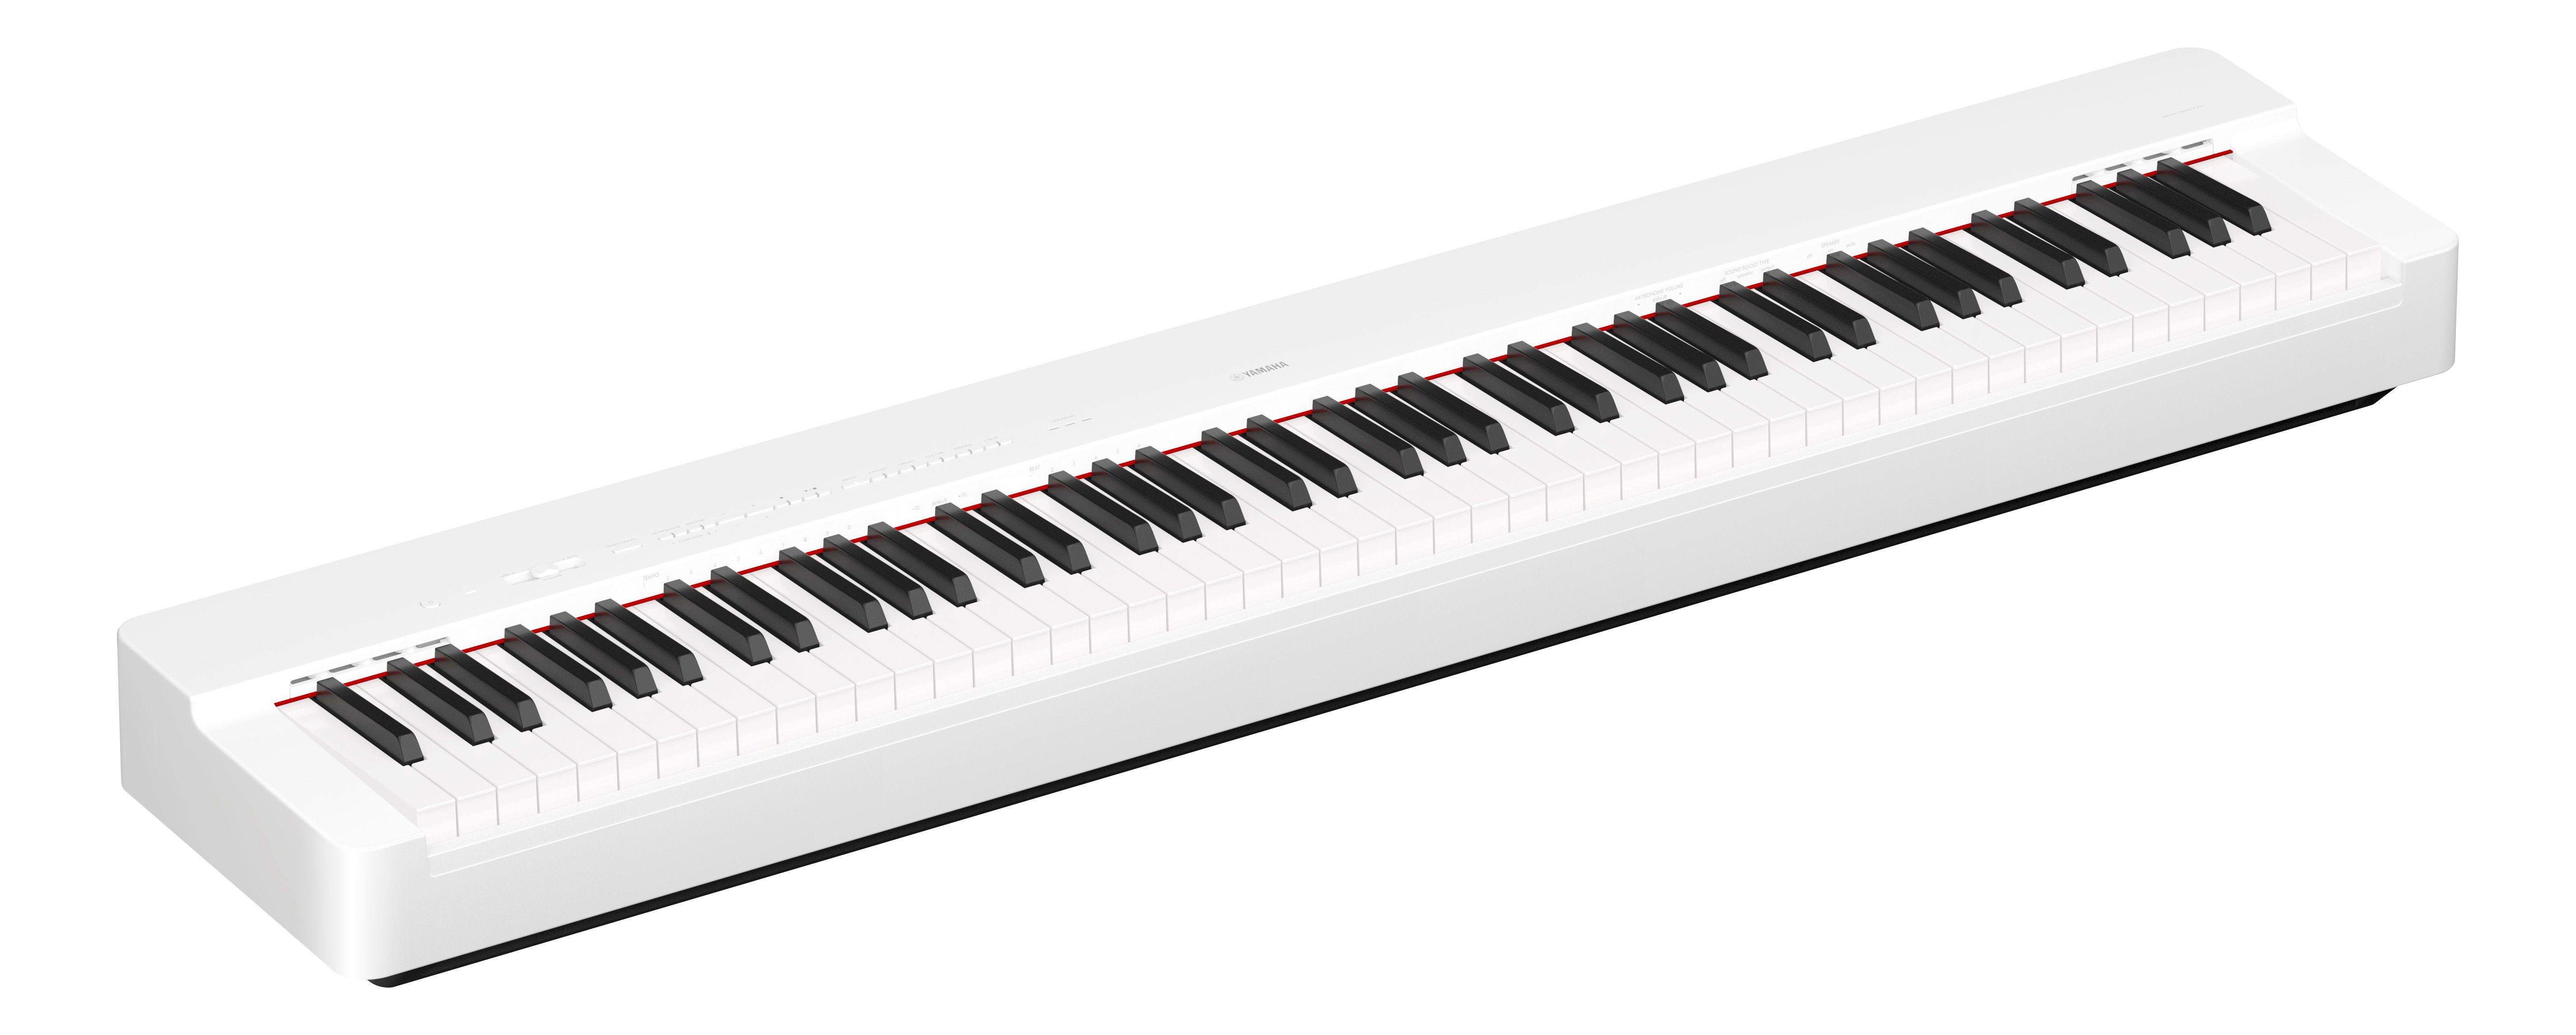 Yamaha P-225 White - Portable digital piano - Variation 5